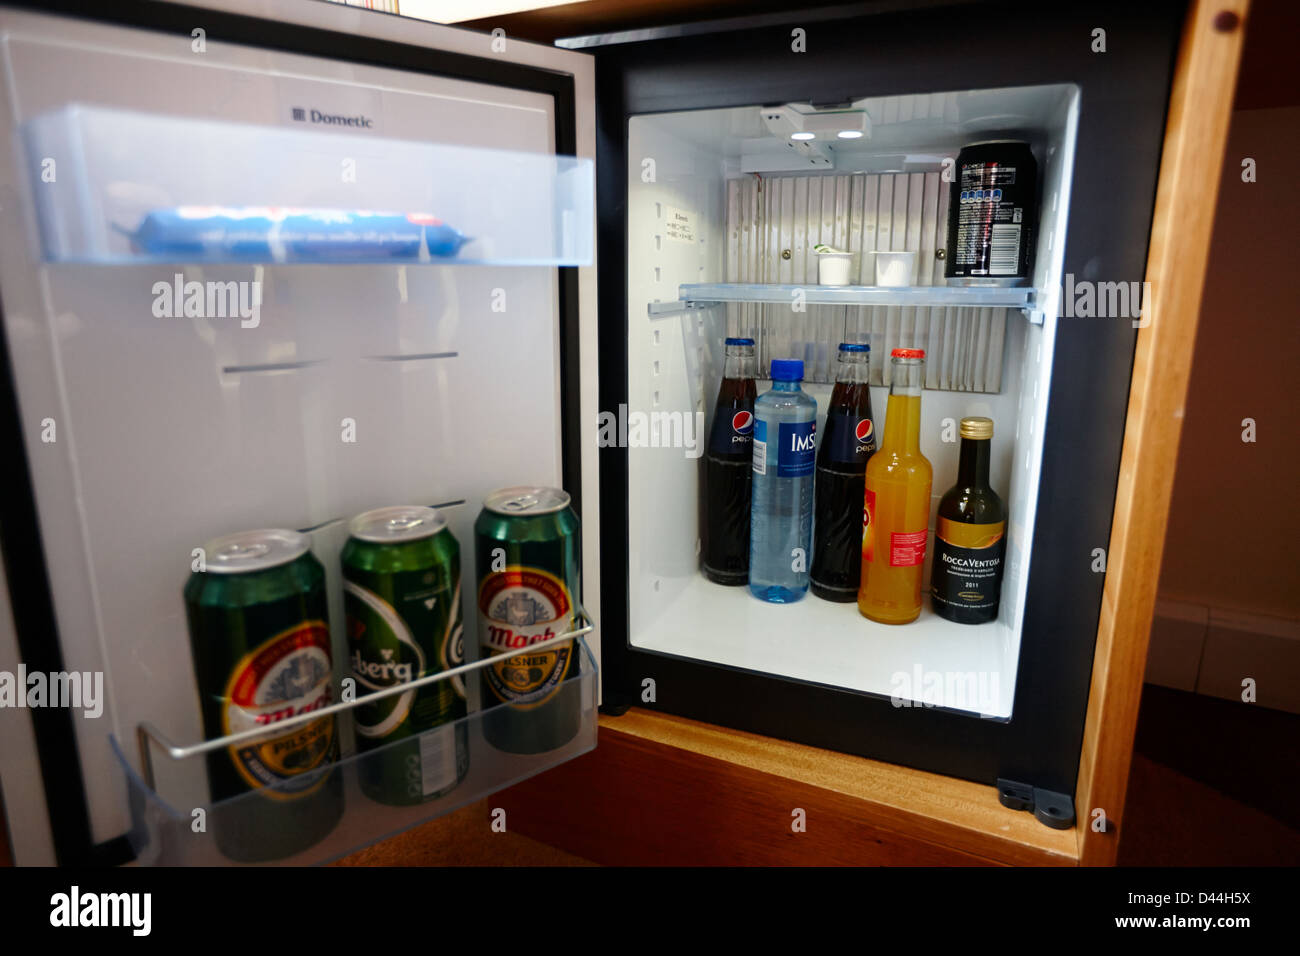 Minibar fridge hi-res stock photography and images - Alamy